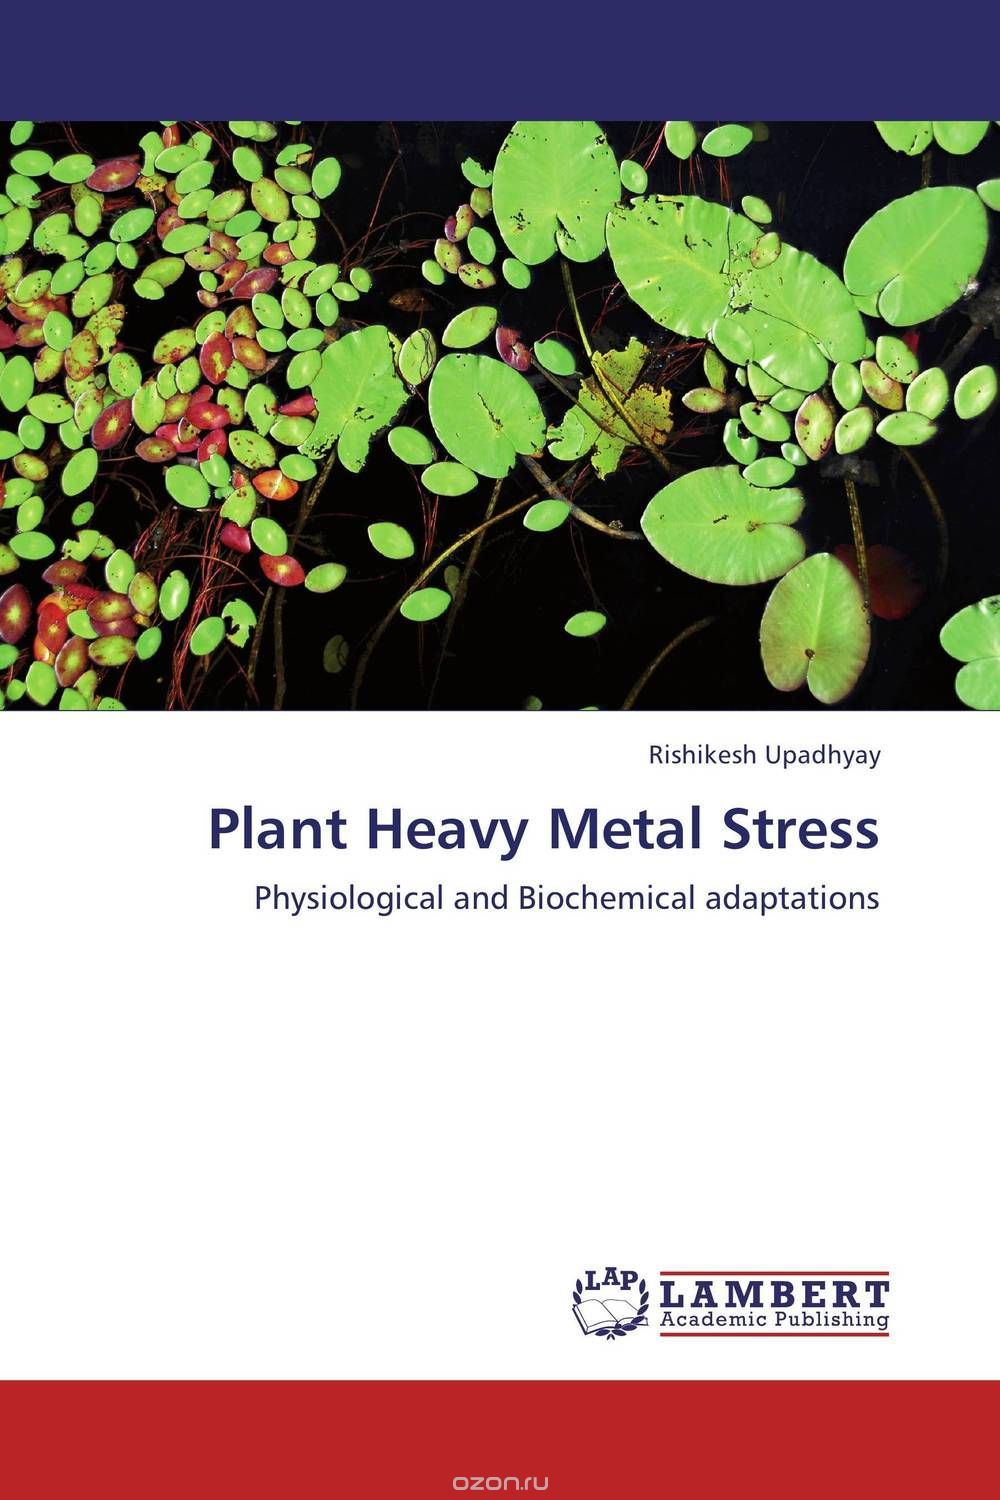 Скачать книгу "Plant Heavy Metal Stress"